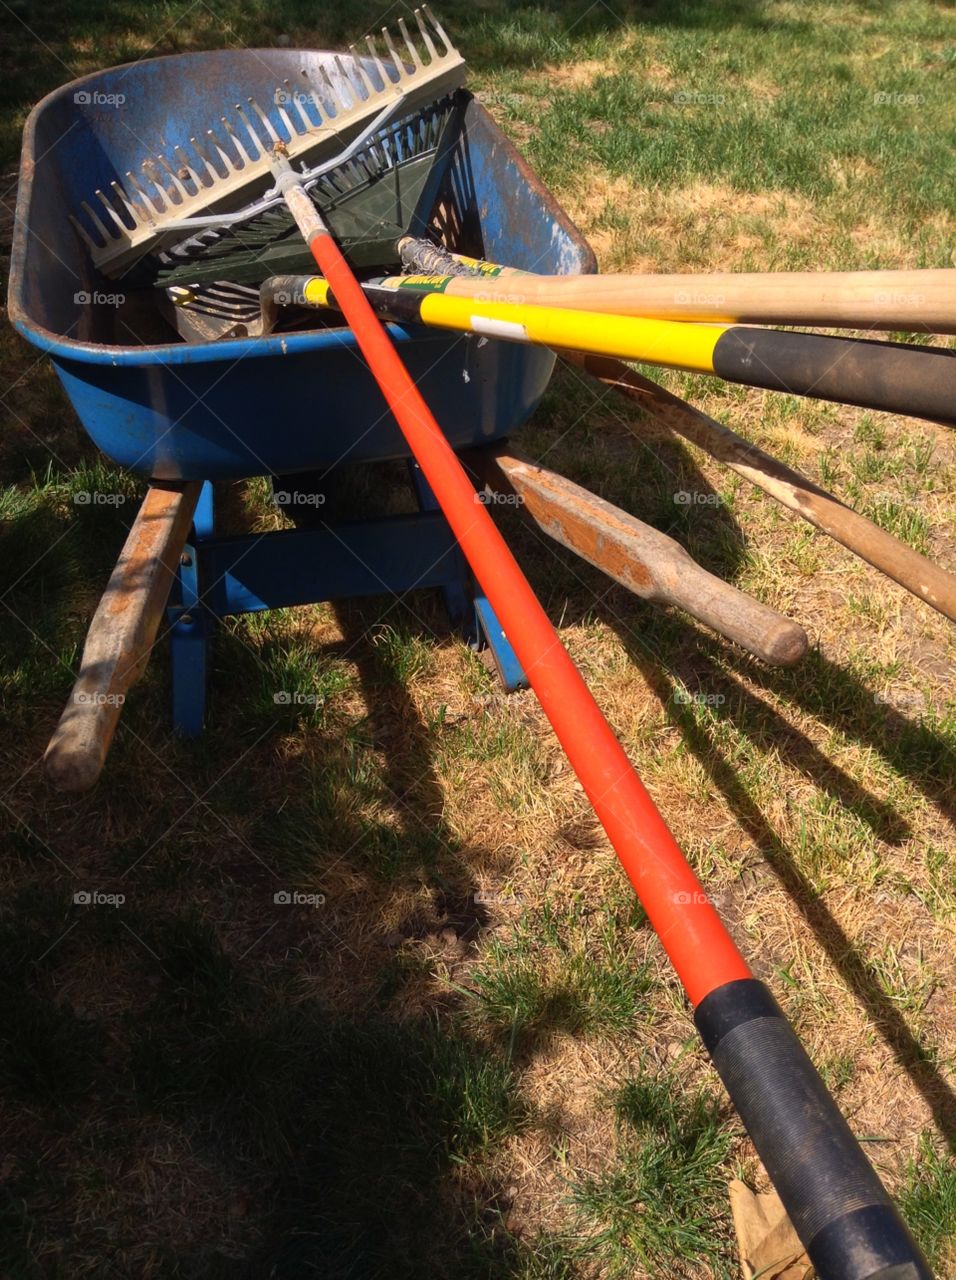 Wheelbarrow of gardening tools. Wheelbarrow of gardening tools